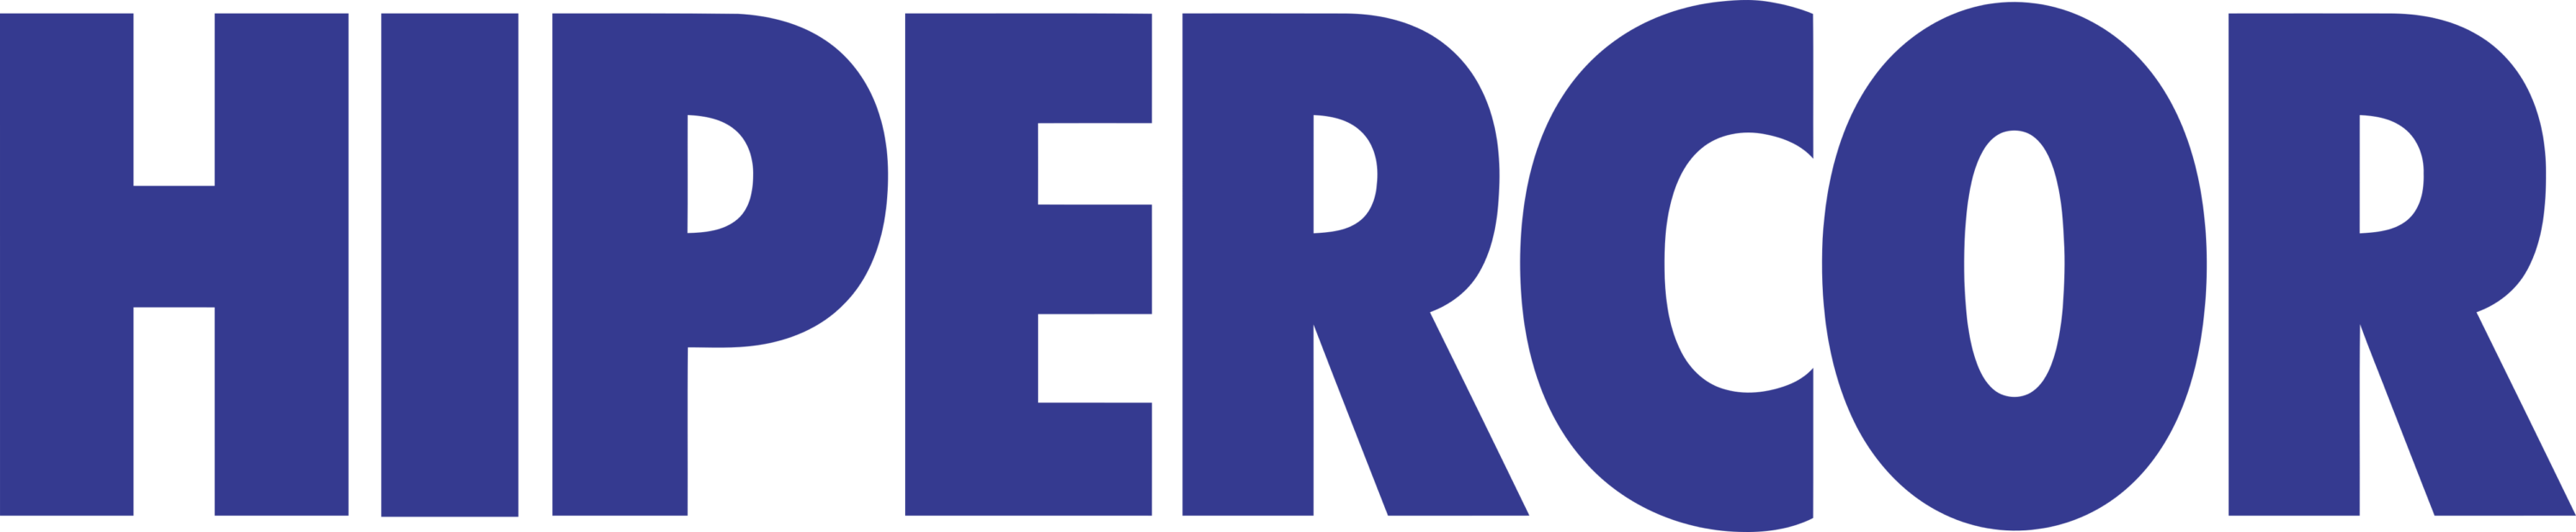 Hipercor Logo